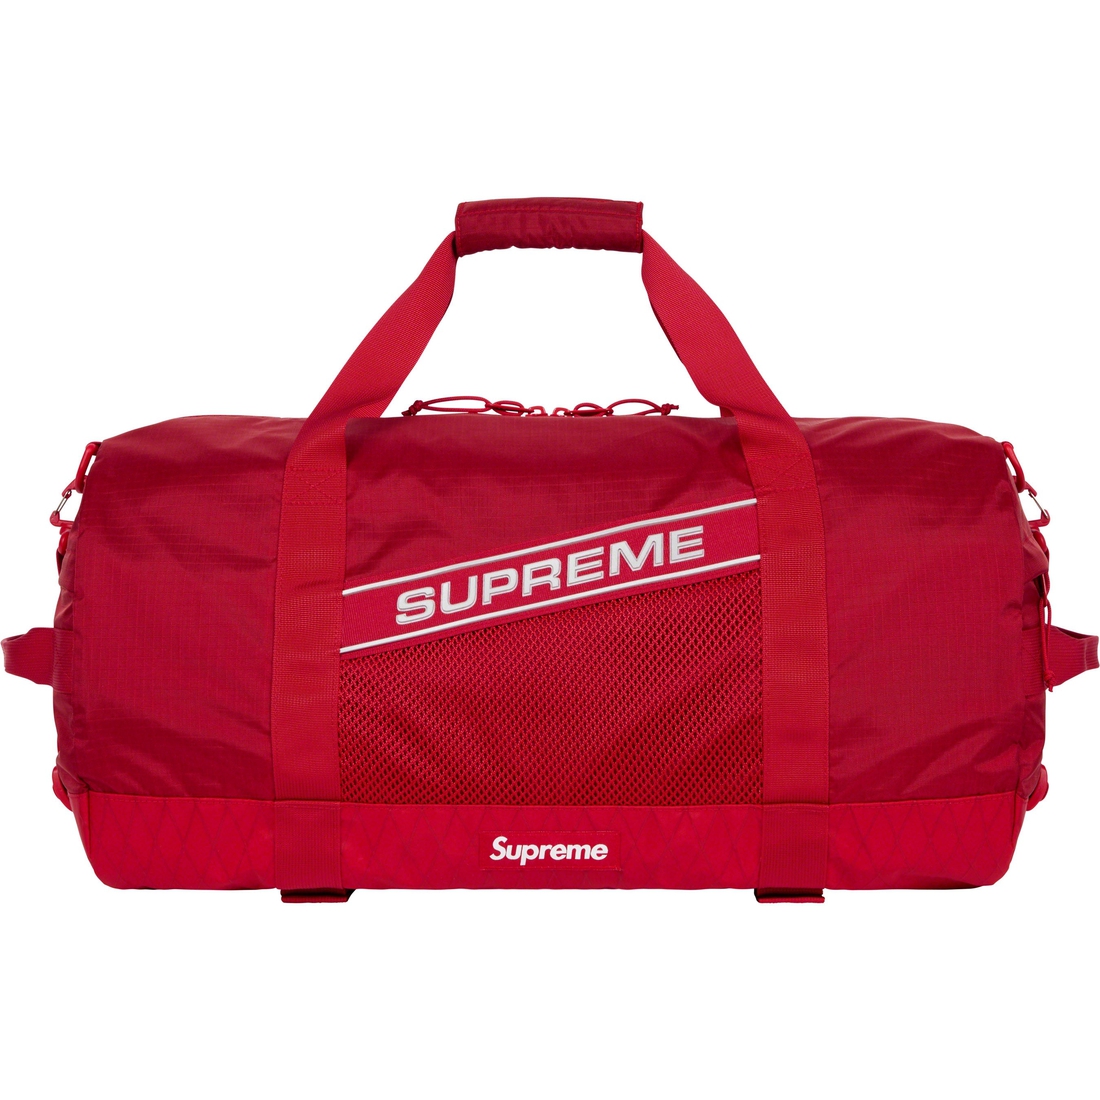 Supremeシュプリーム 3D Logo Duffle Bag se1155r素材ナイロン100%